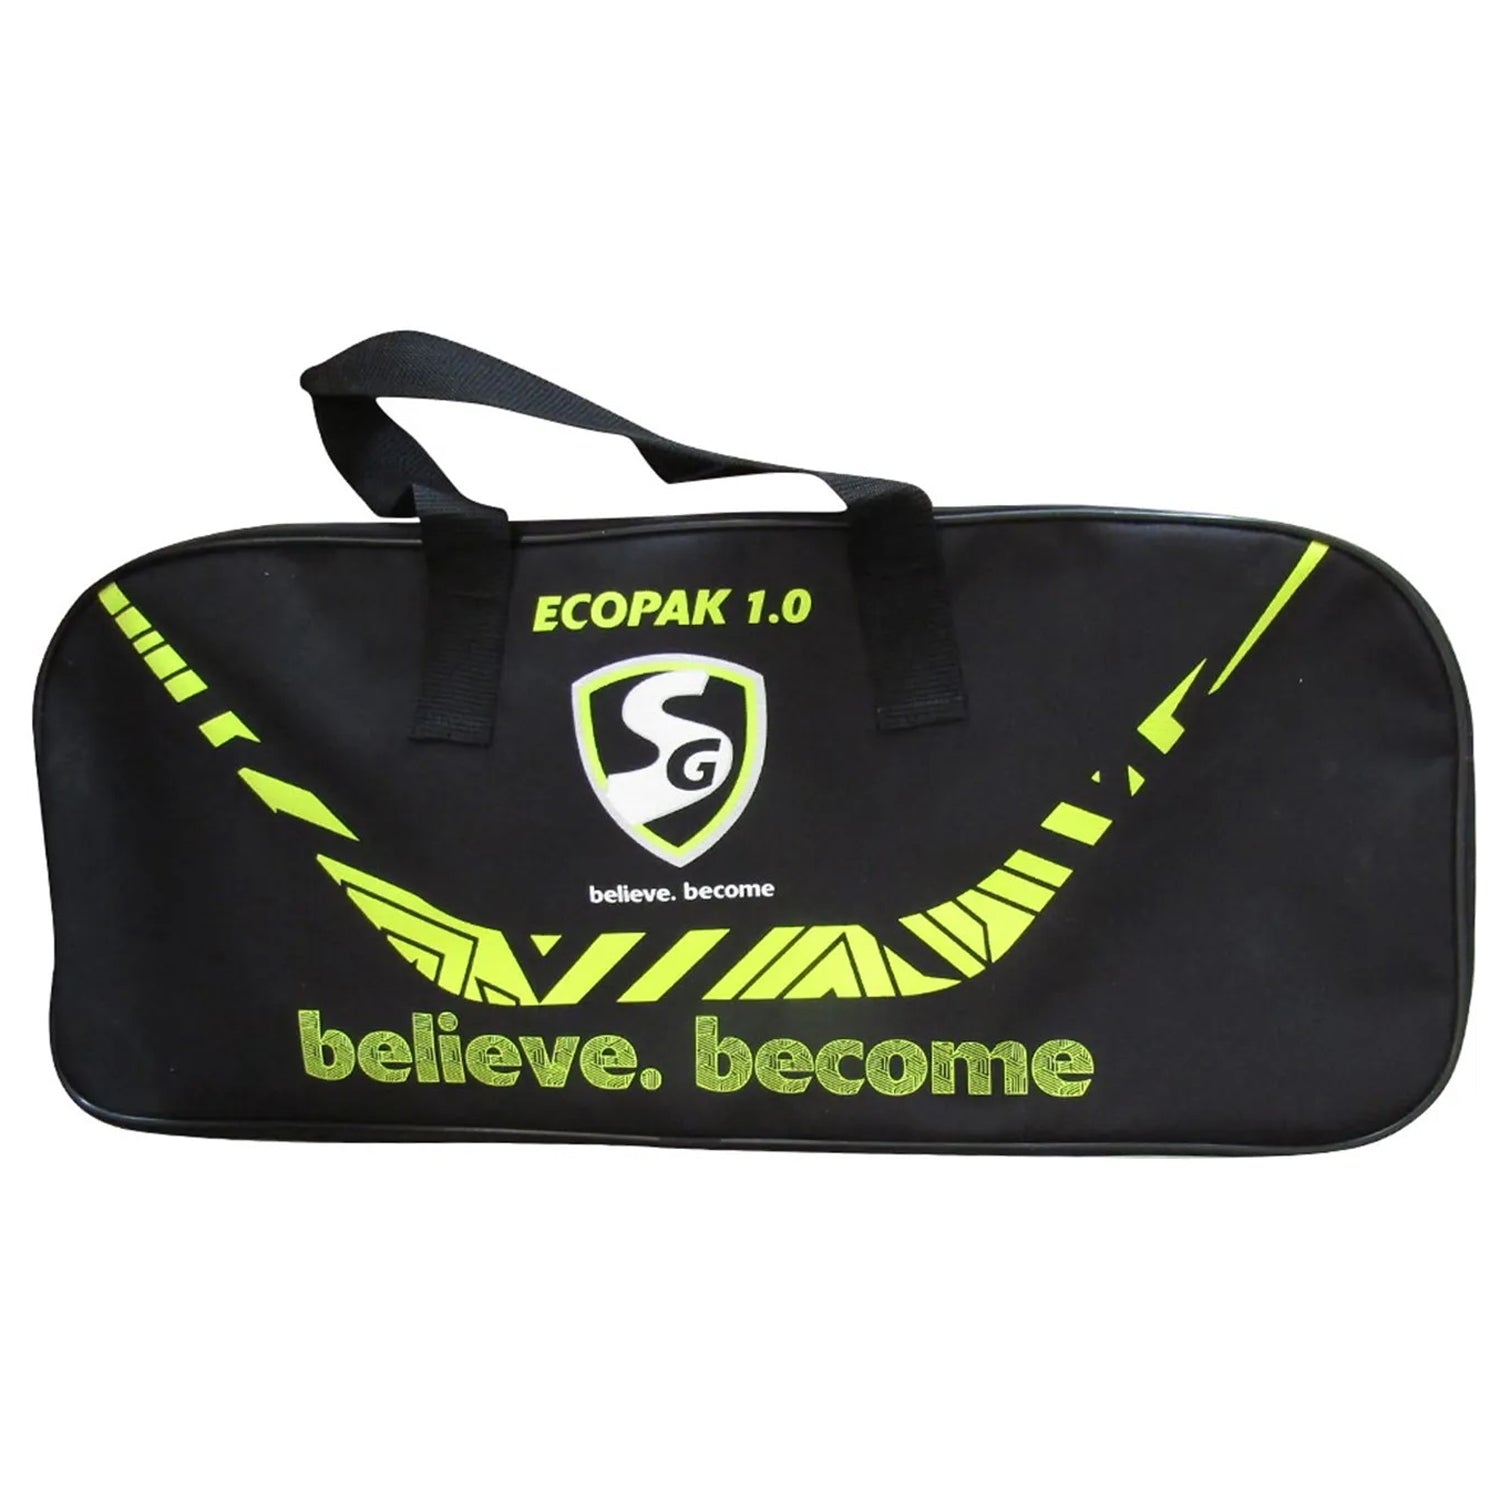 SG Ecopak 1.0 Kit Cricket Kit Bag, Large - Best Price online Prokicksports.com